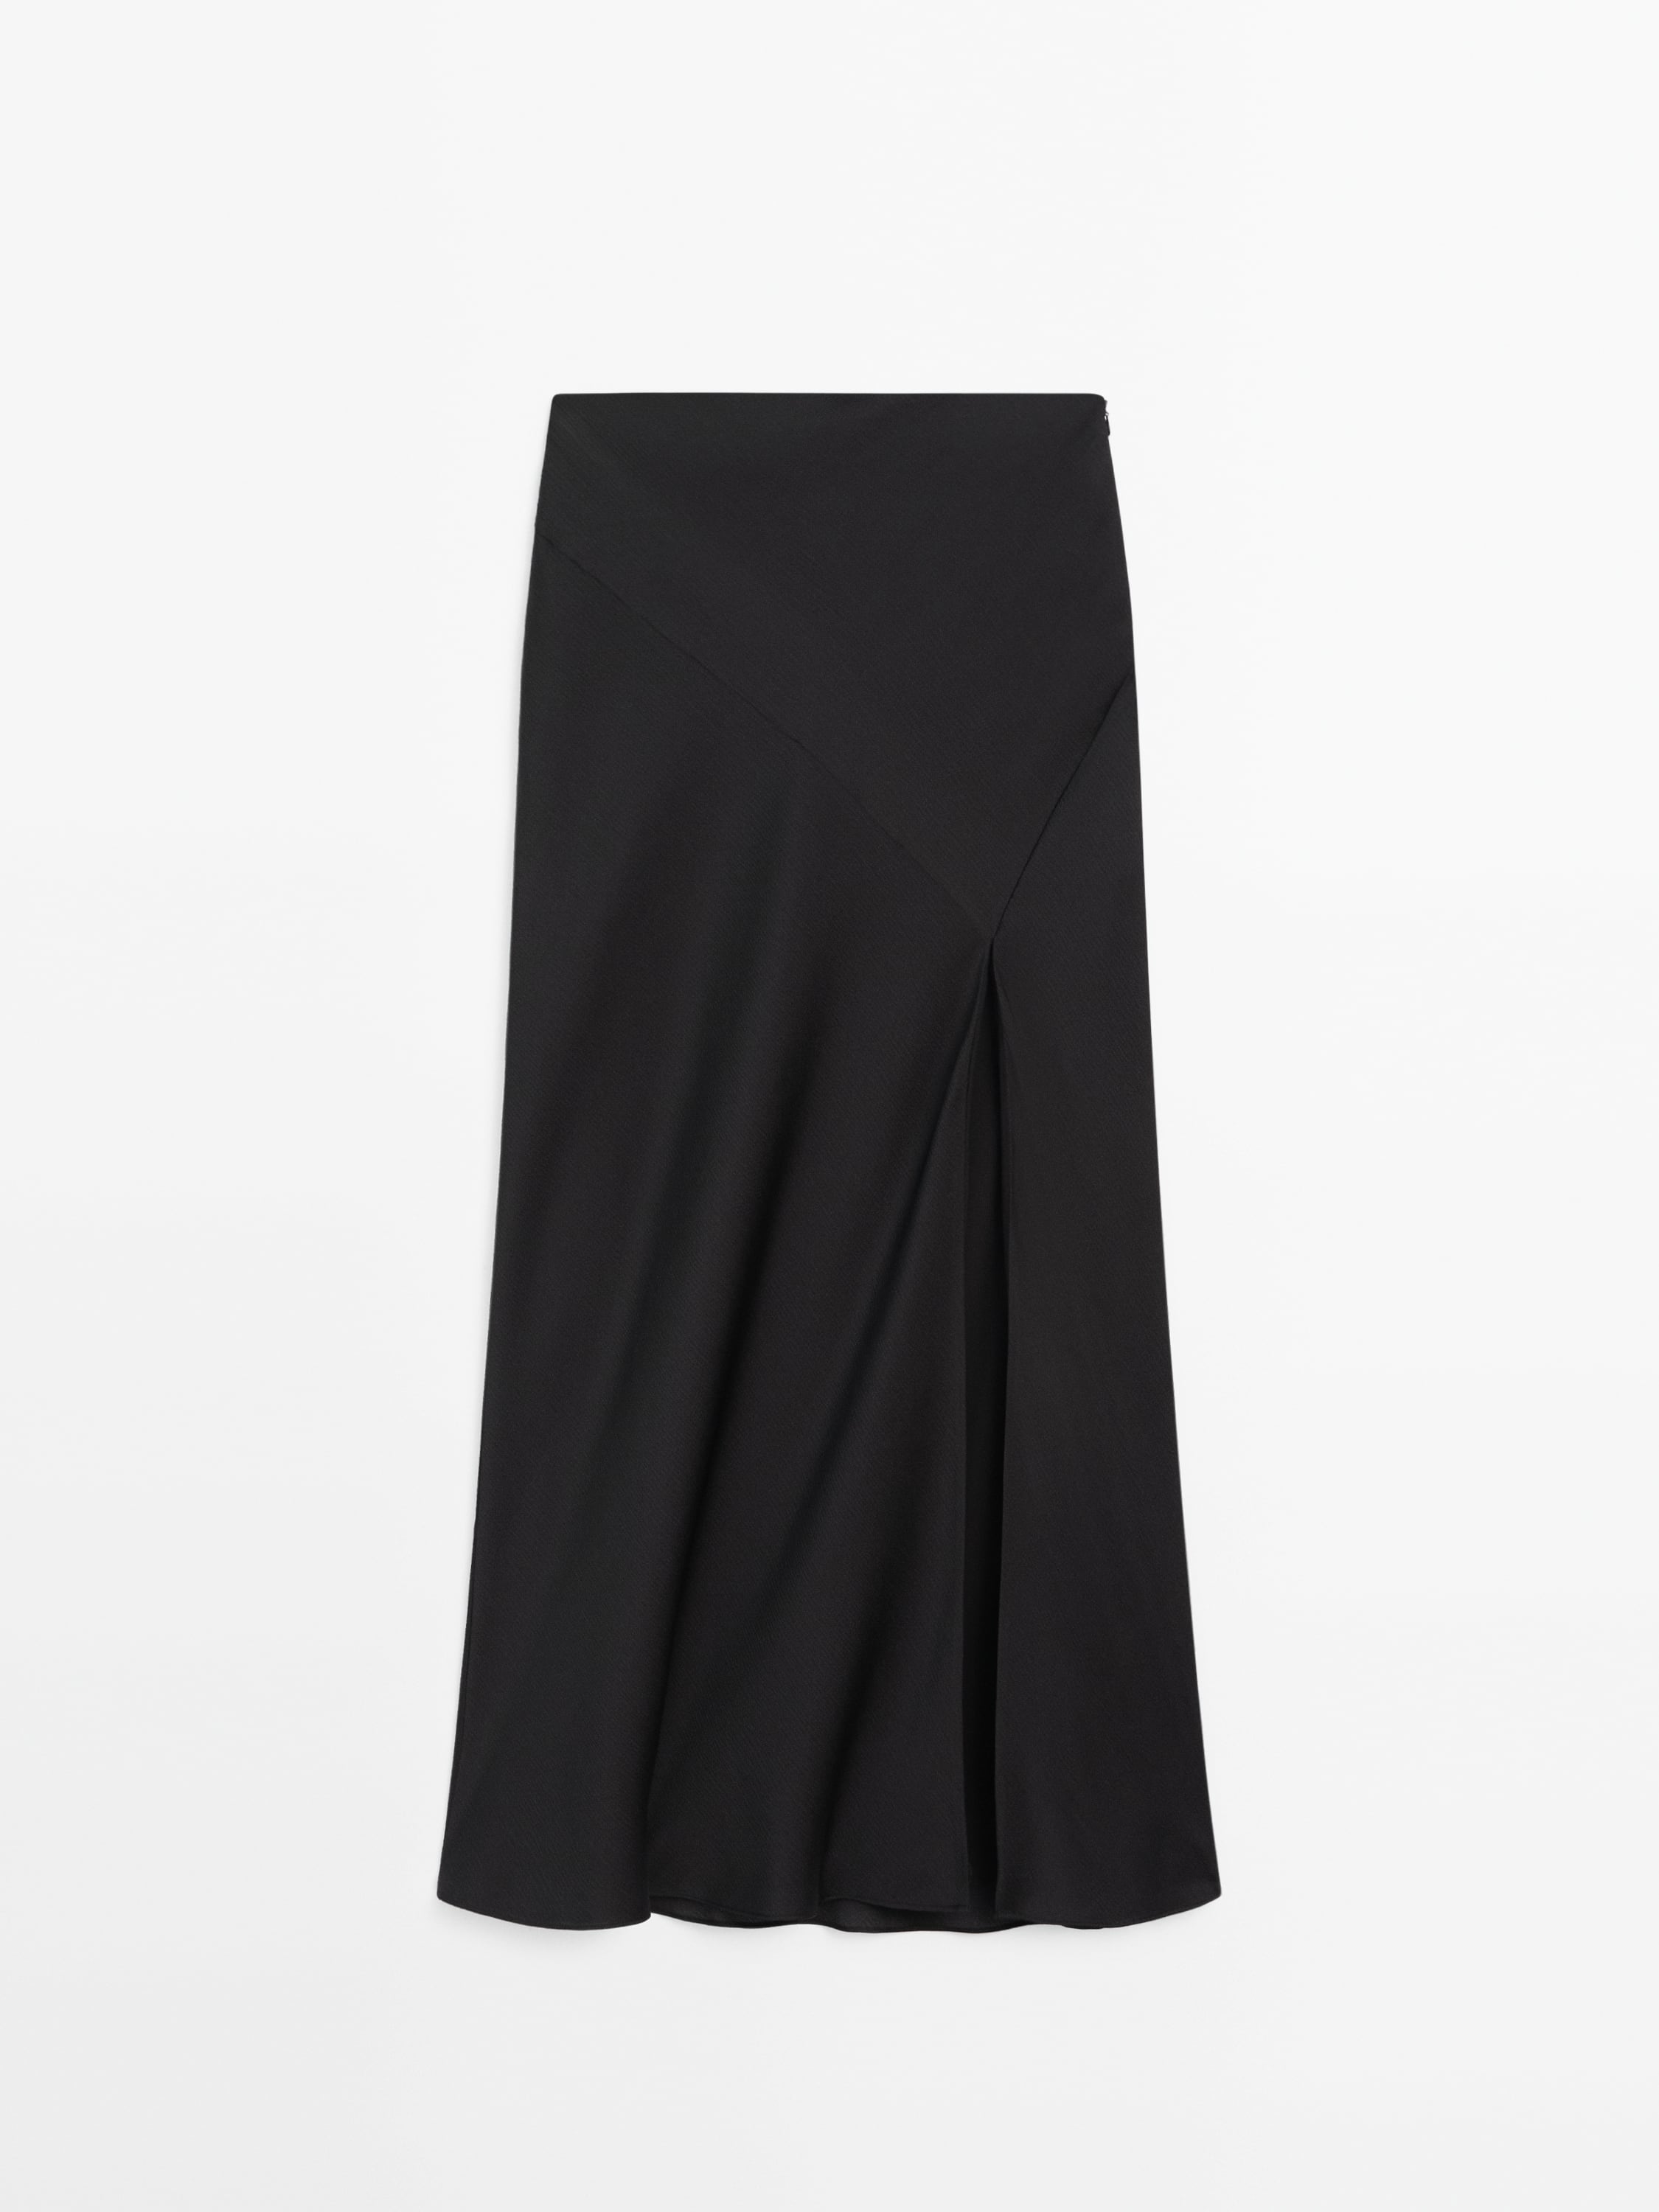 Bias-cut textured midi skirt with split detail - Studio